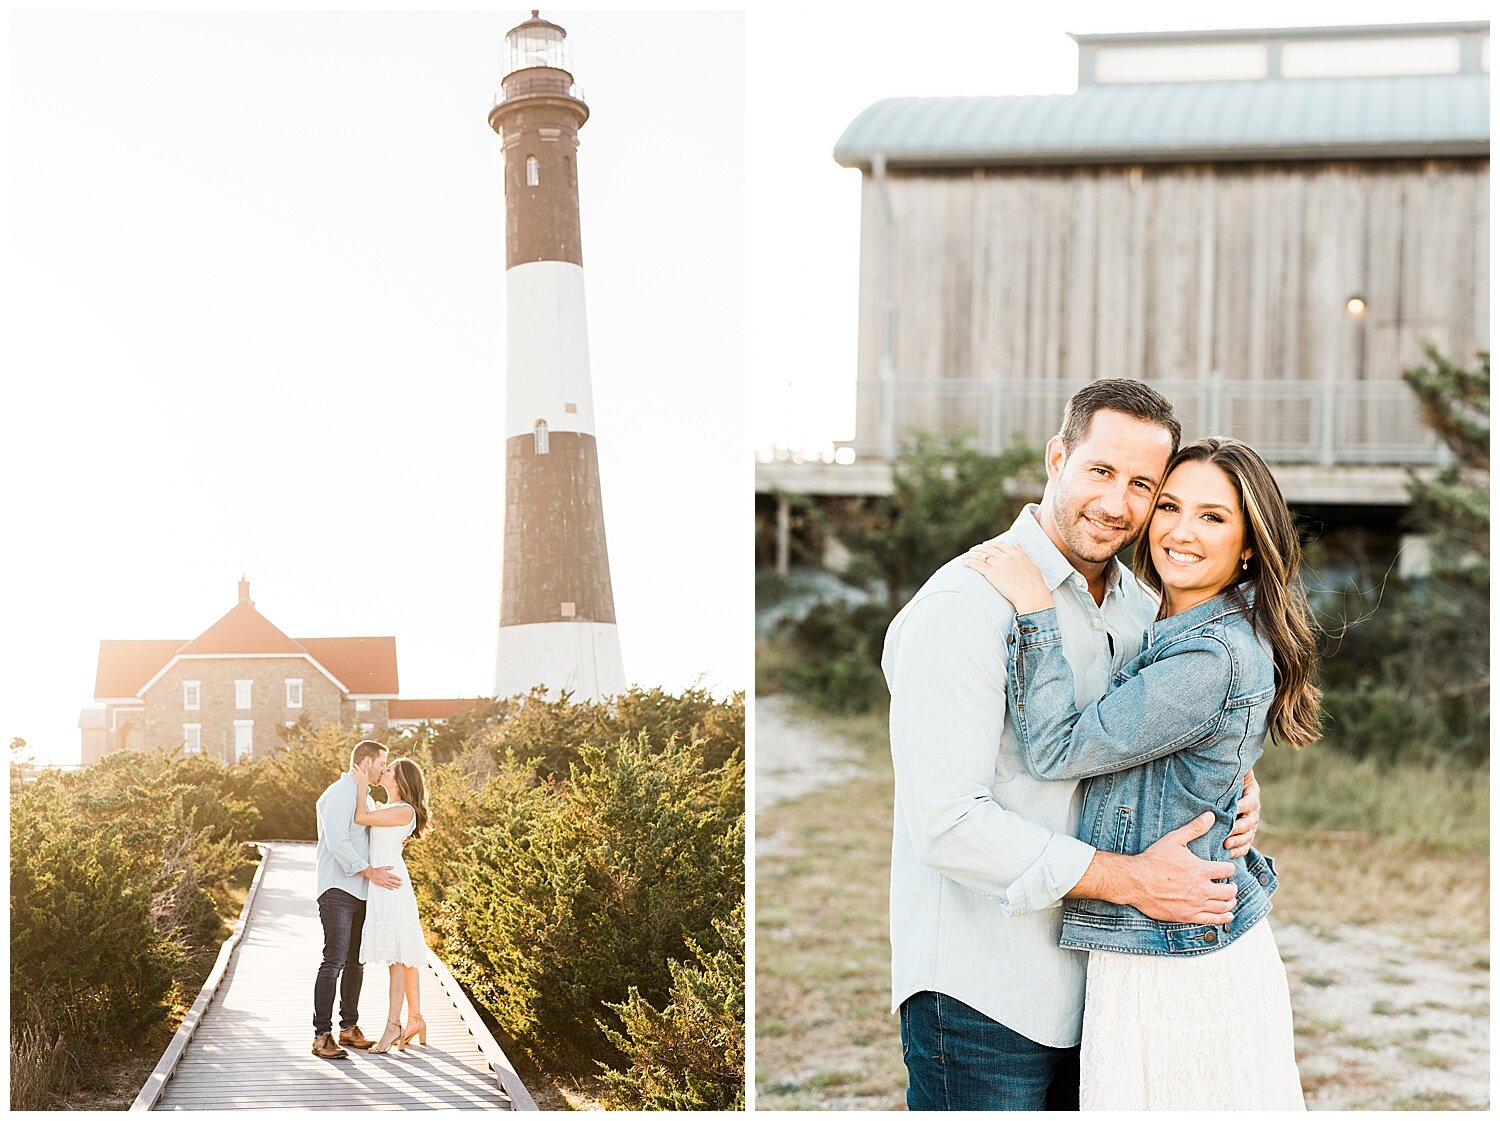 Fire-Island-Lighthouse-Engagement-Photography-Apollo-Fields-Robert-Moses-Beach-11.jpg